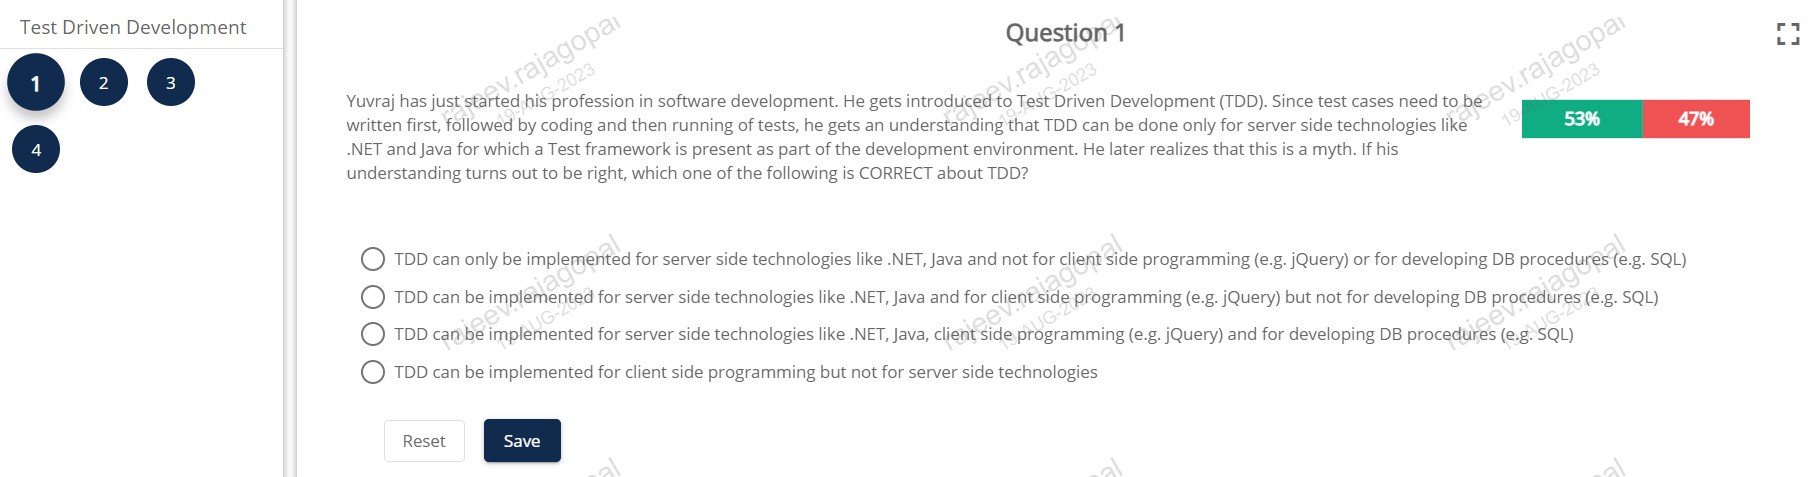 Test Driven Development 1 4 2 3 Yuvraj has just stav.rajagopai Driven Development (TDD). Since test cases